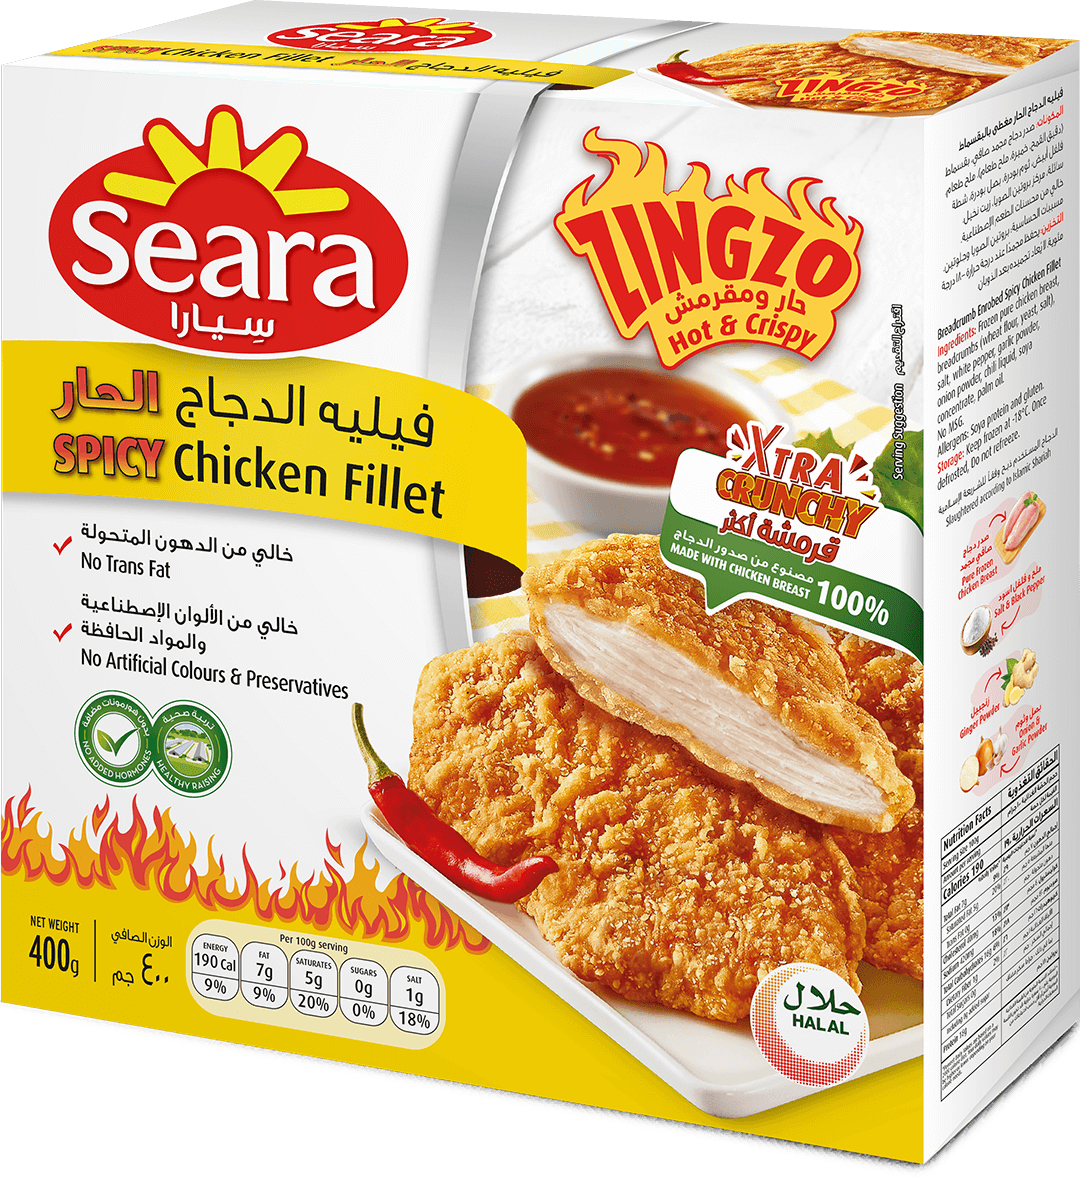 Seara Spicy Chicken Fillet (Zingzo) 400G